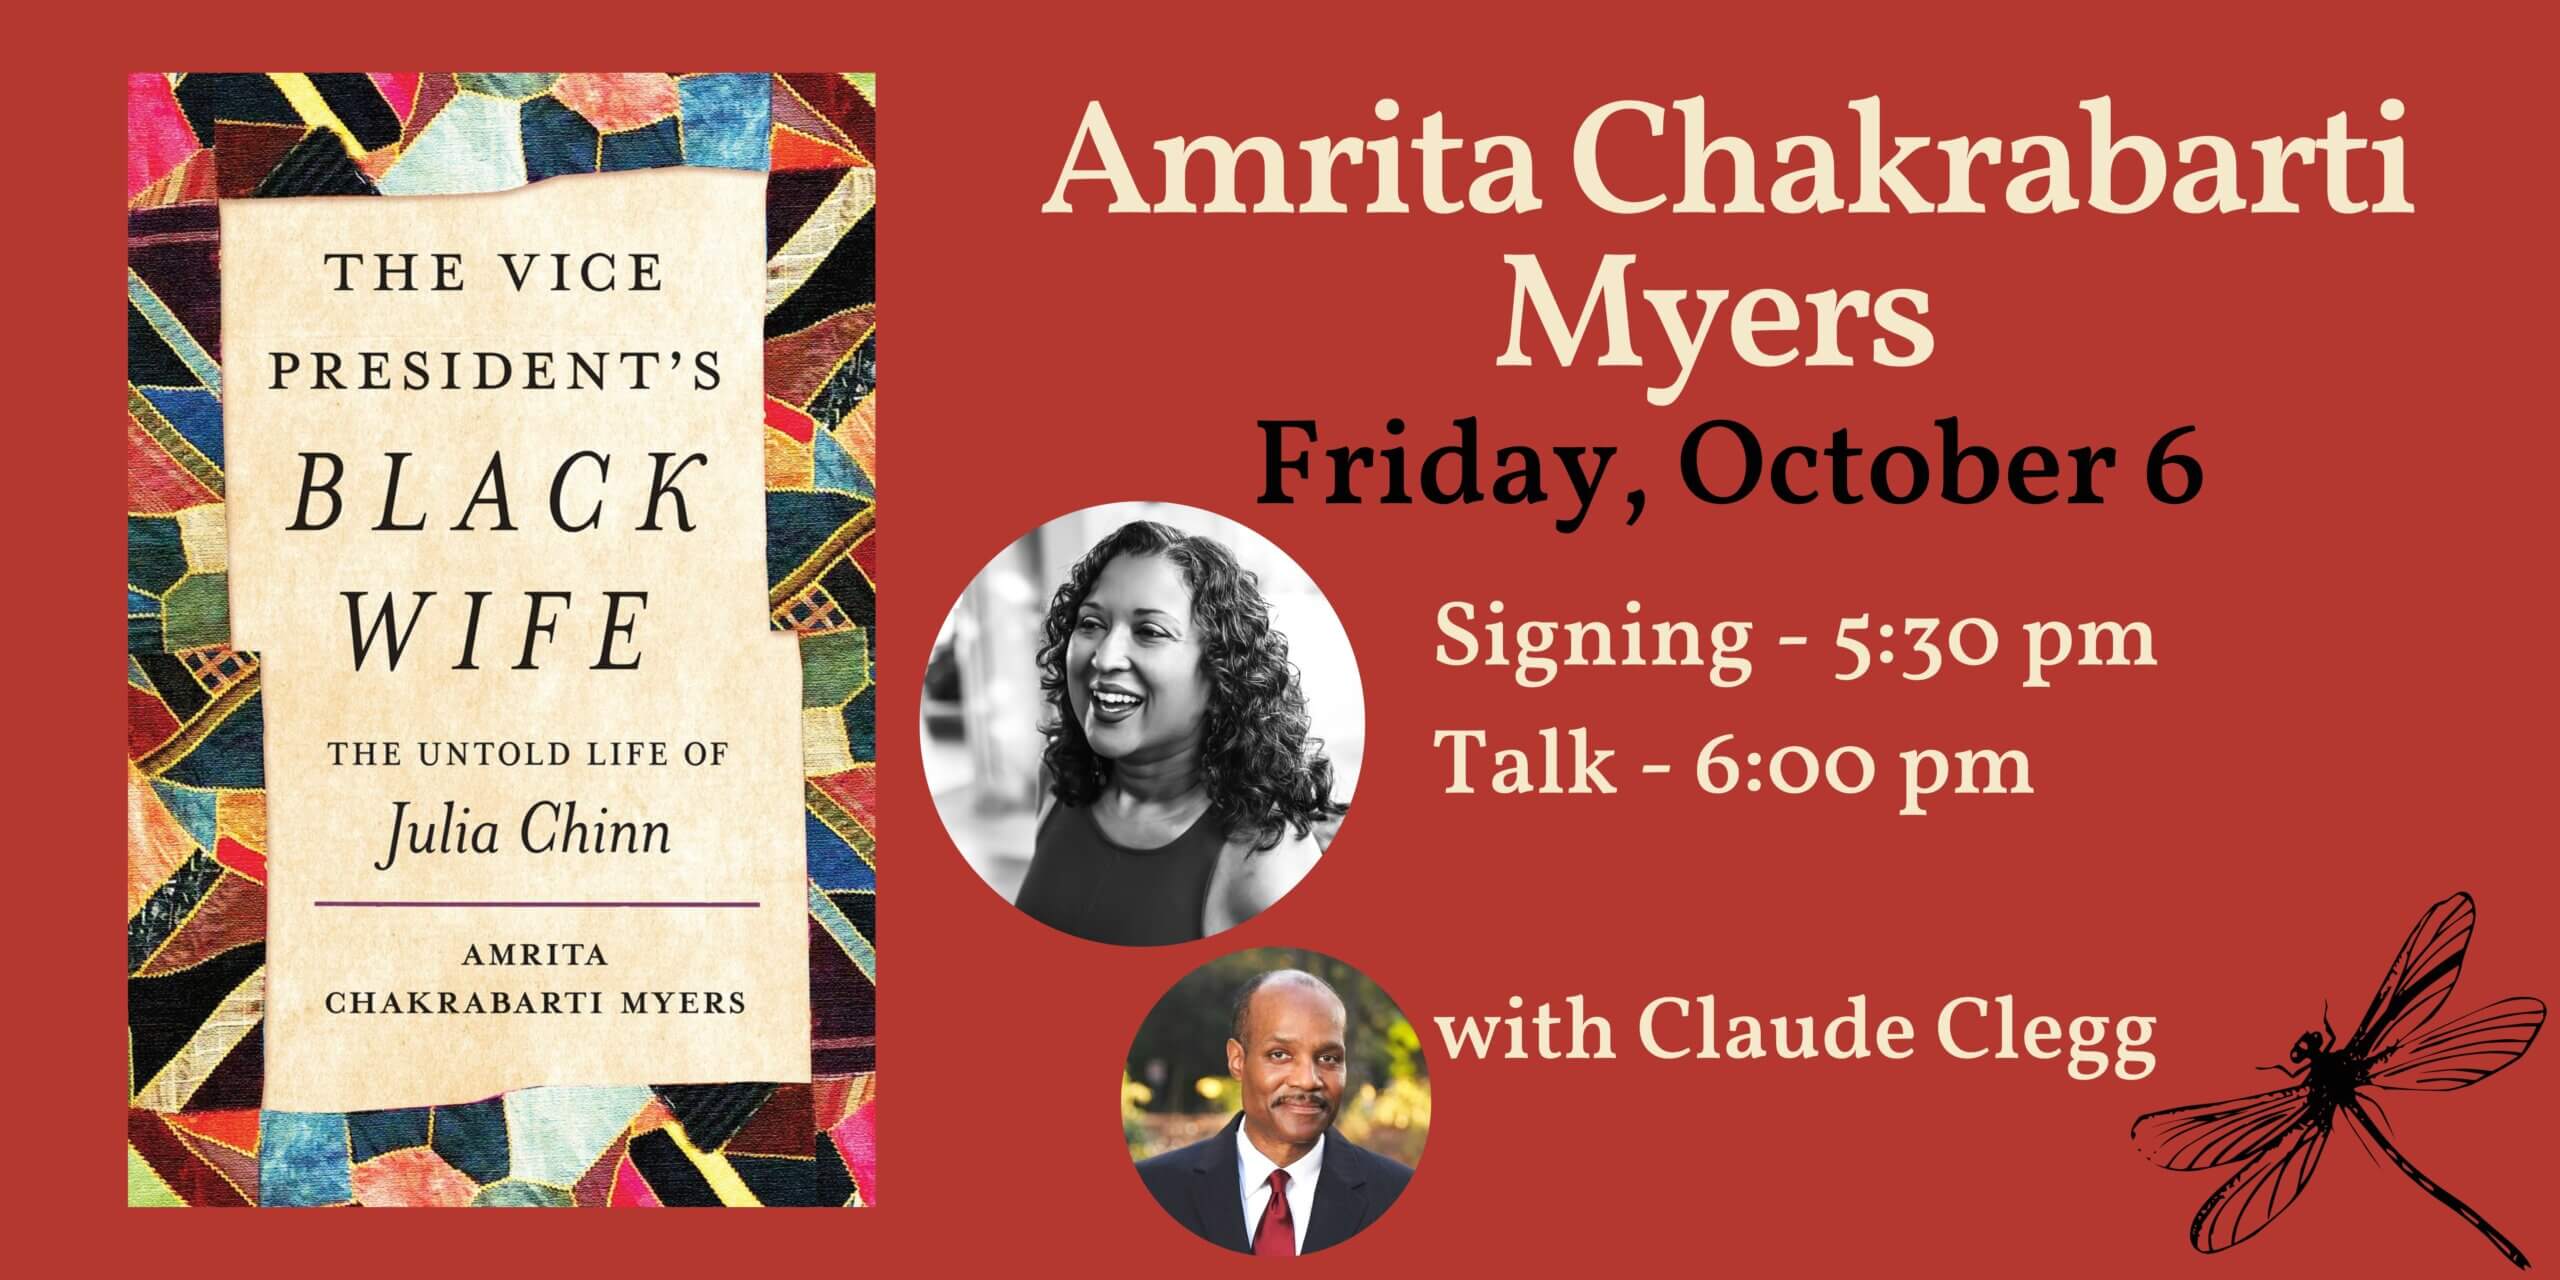 Amrita Chakrabarti Myers at Flyleaf Books